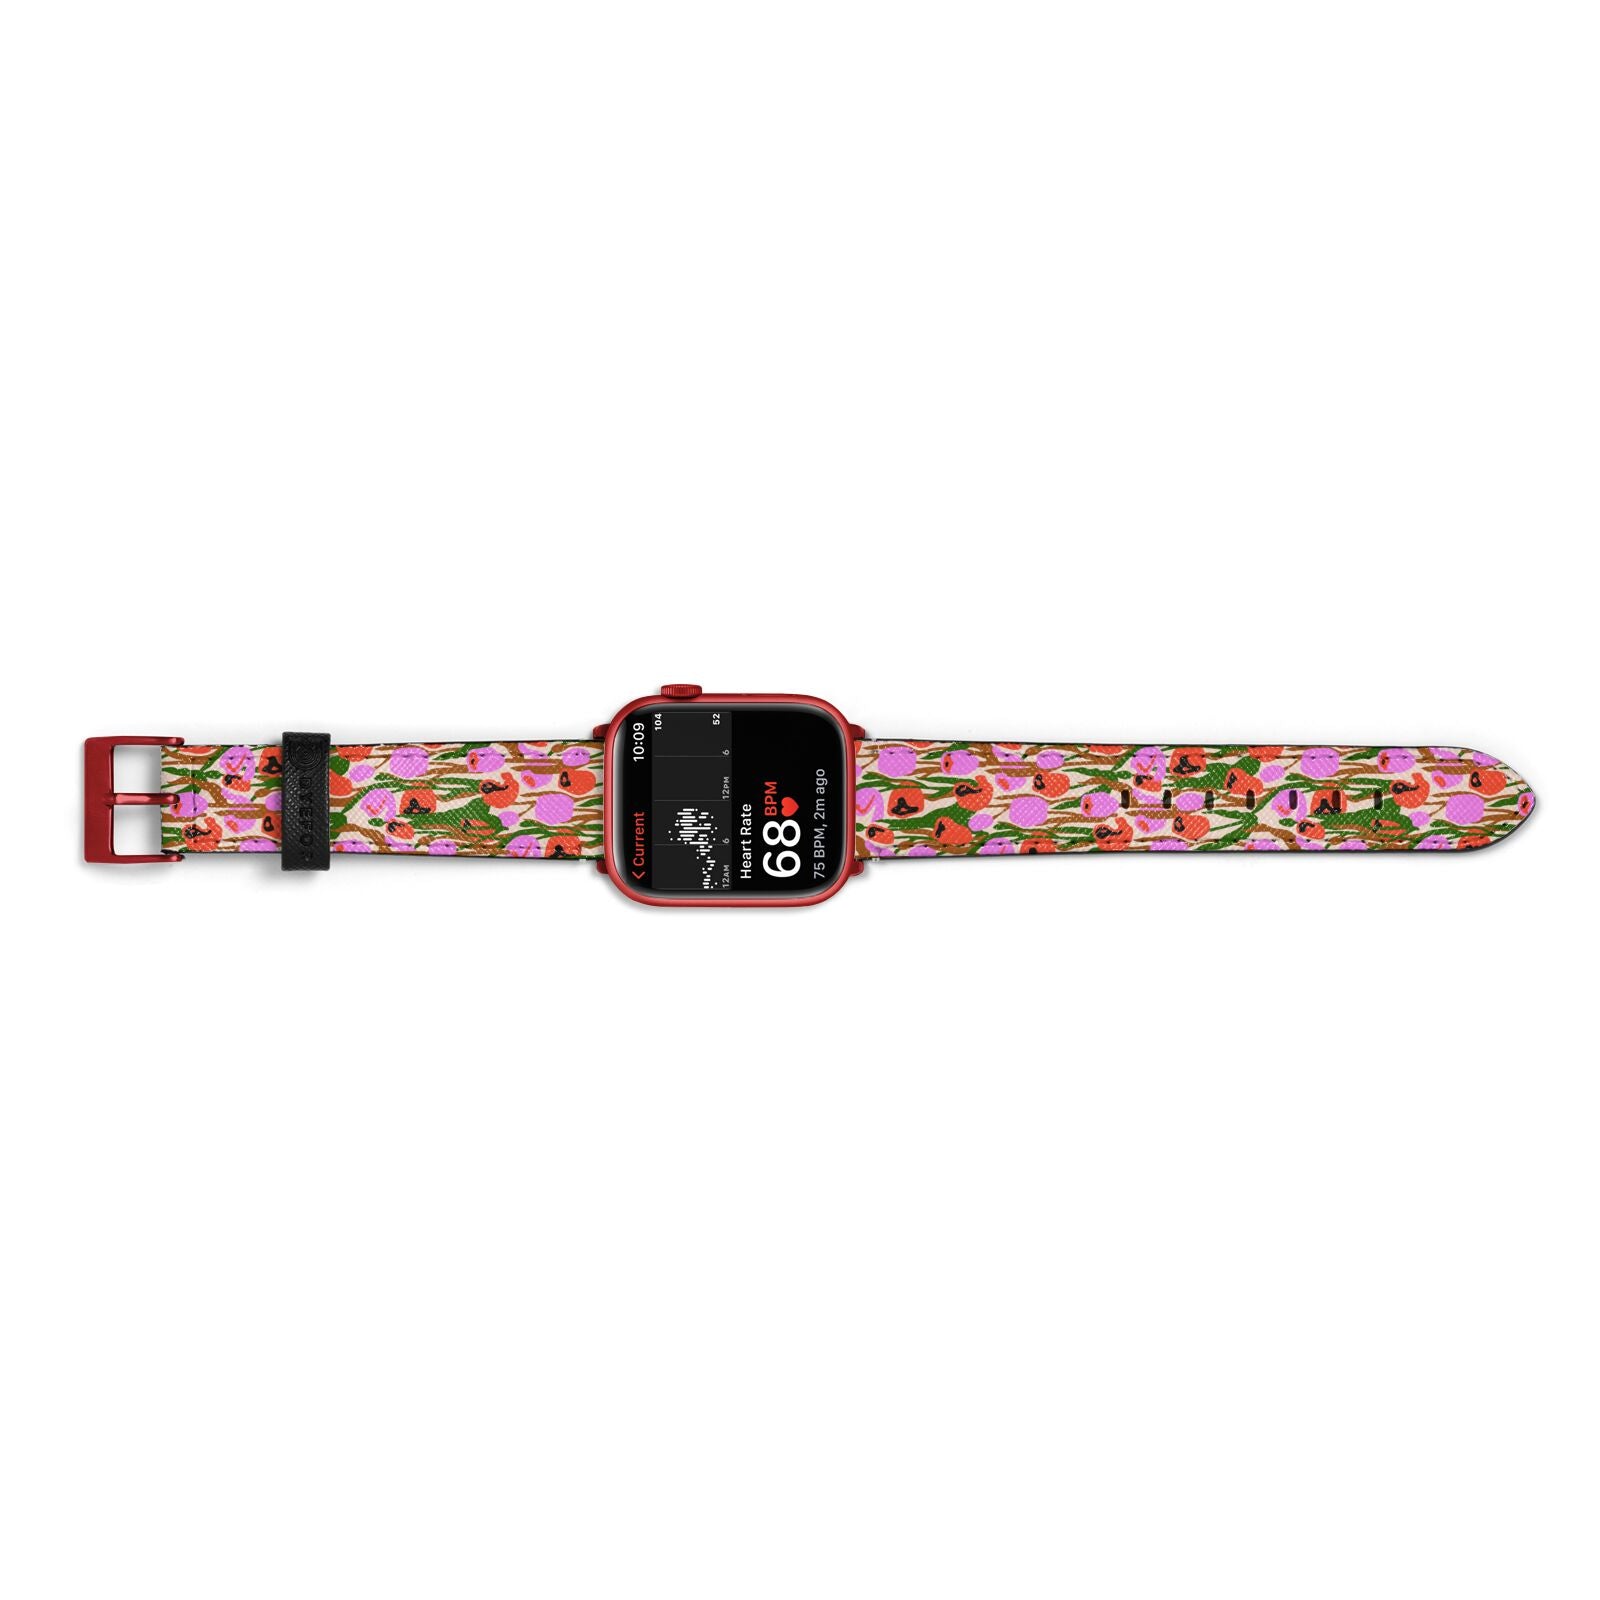 Floral Apple Watch Strap Size 38mm Landscape Image Red Hardware